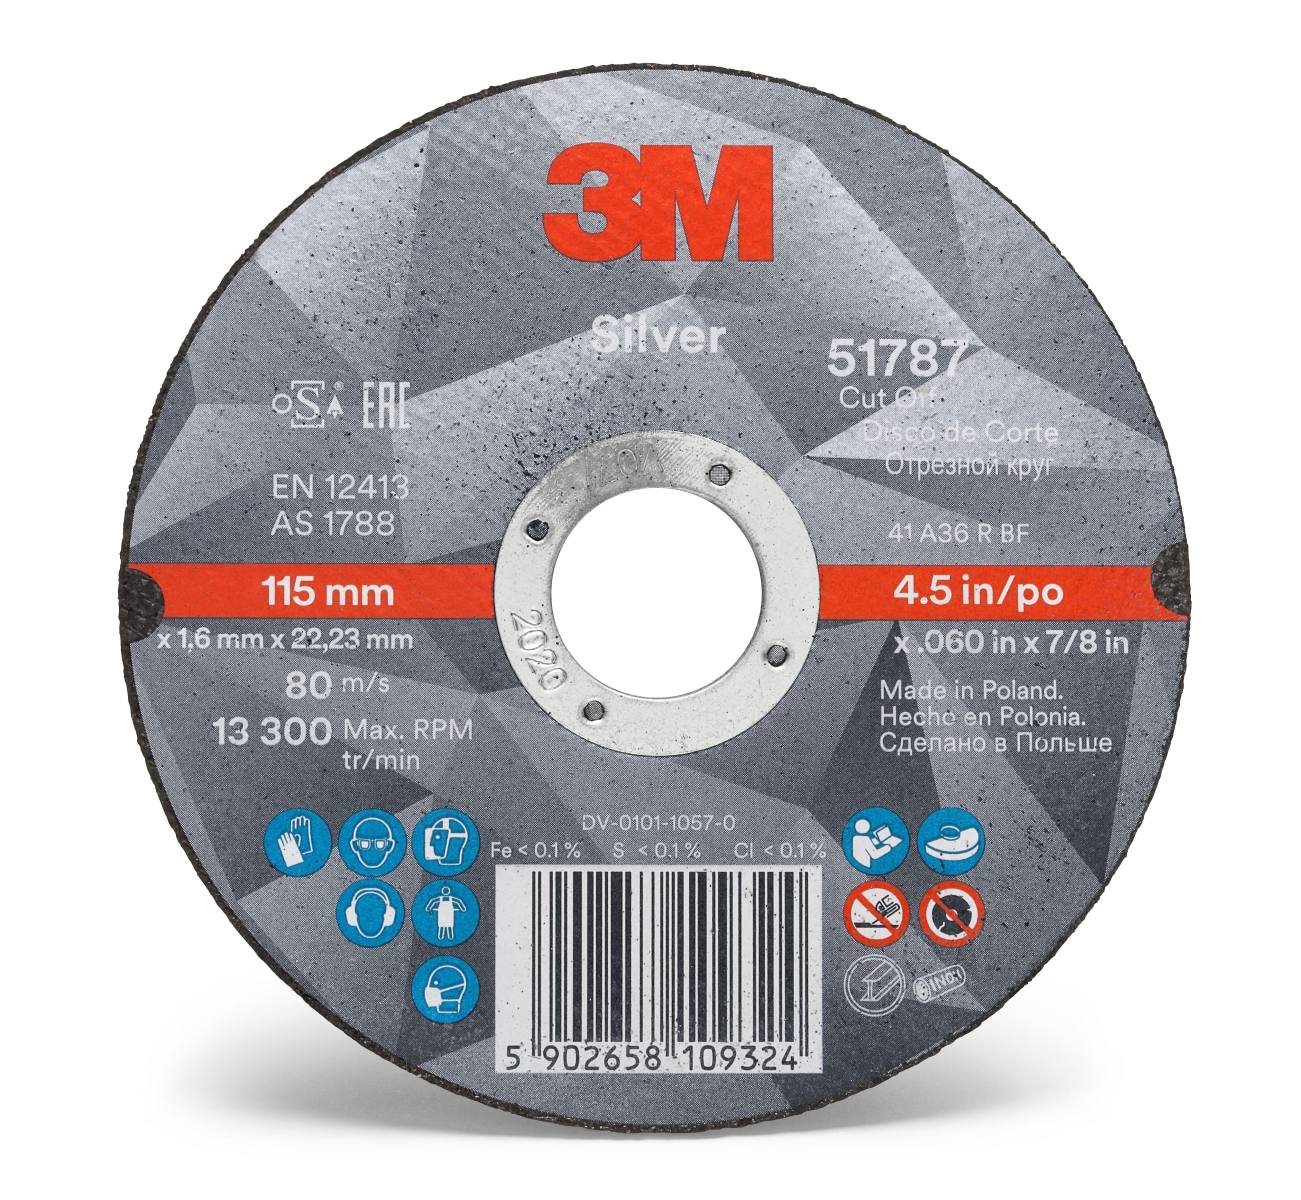 Disco da taglio 3M Silver Cut-Off, 150 mm, 1,6 mm, 22,23 mm, T41, 51814